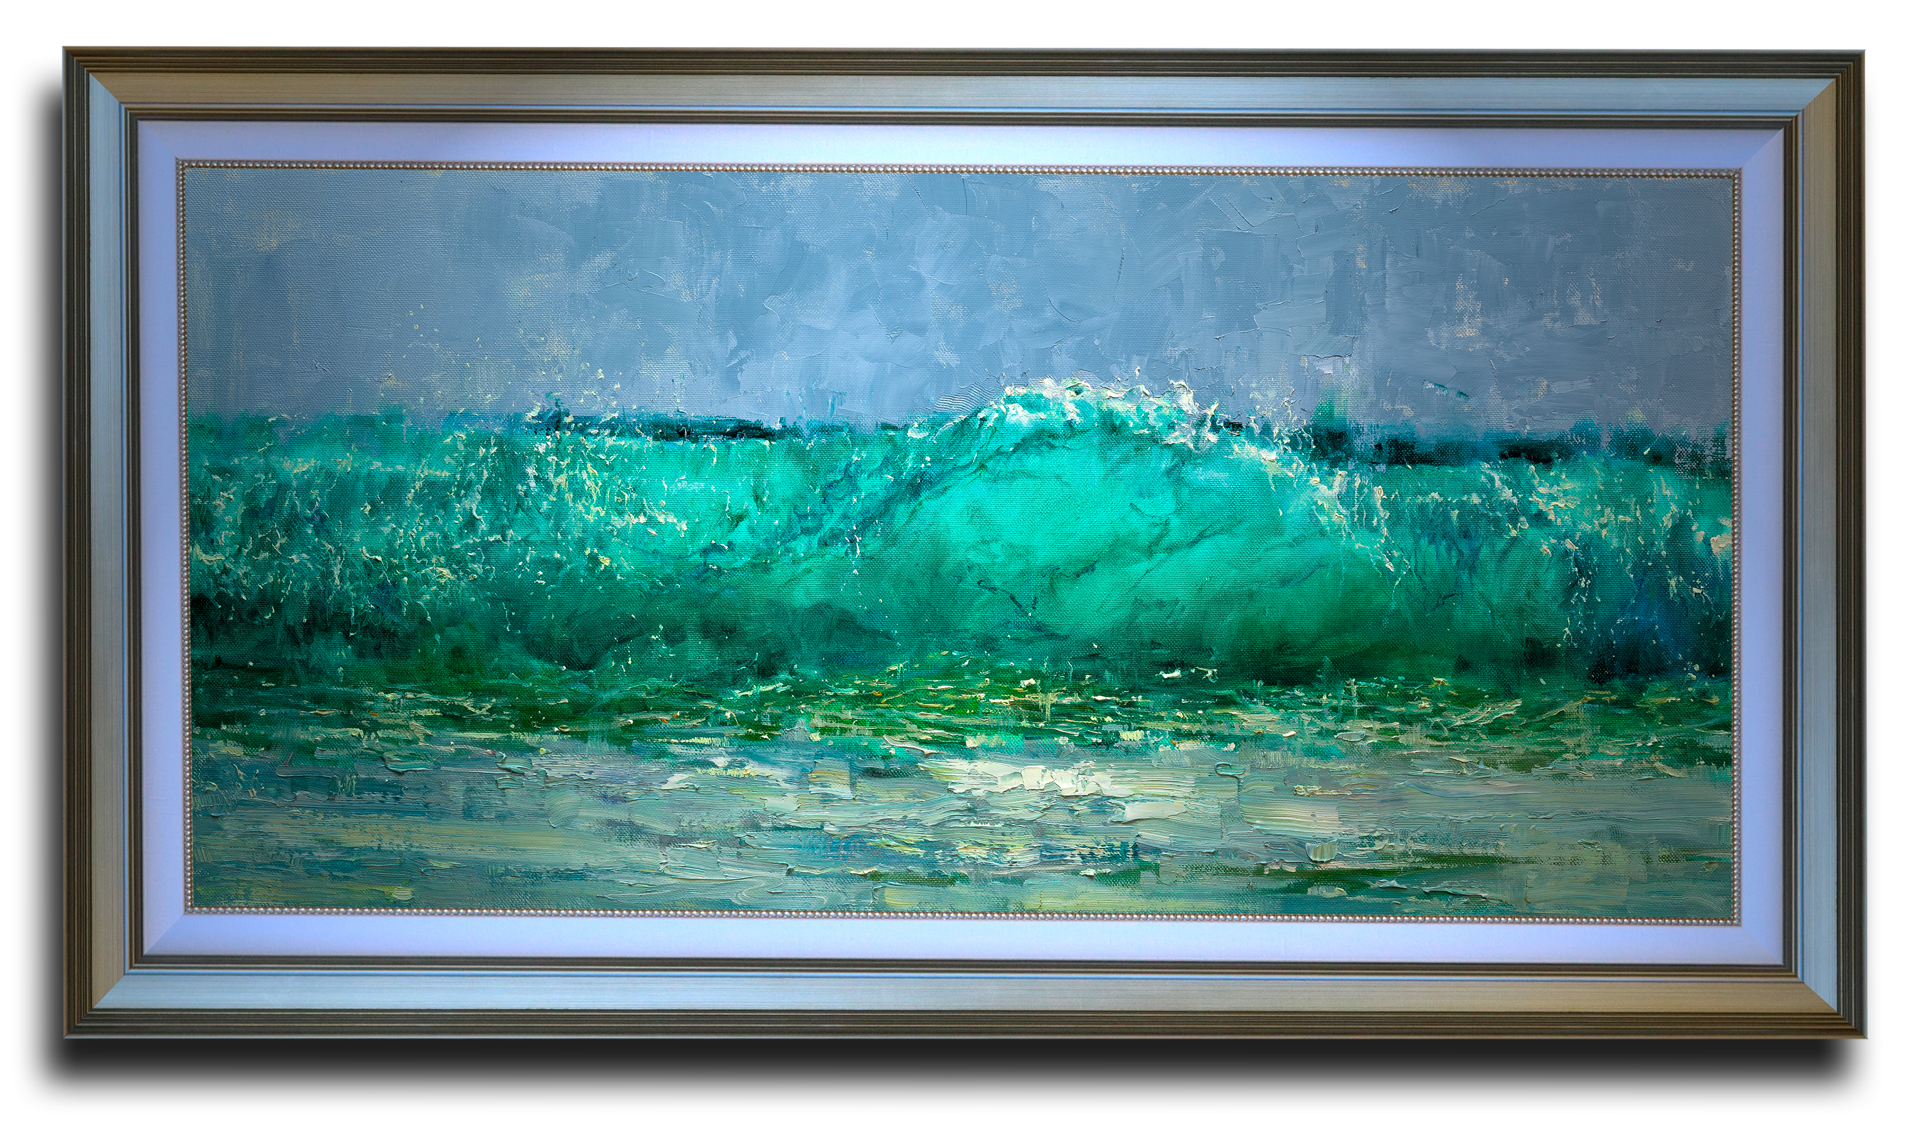 "Emerald Wave" by Oleg Trofimov